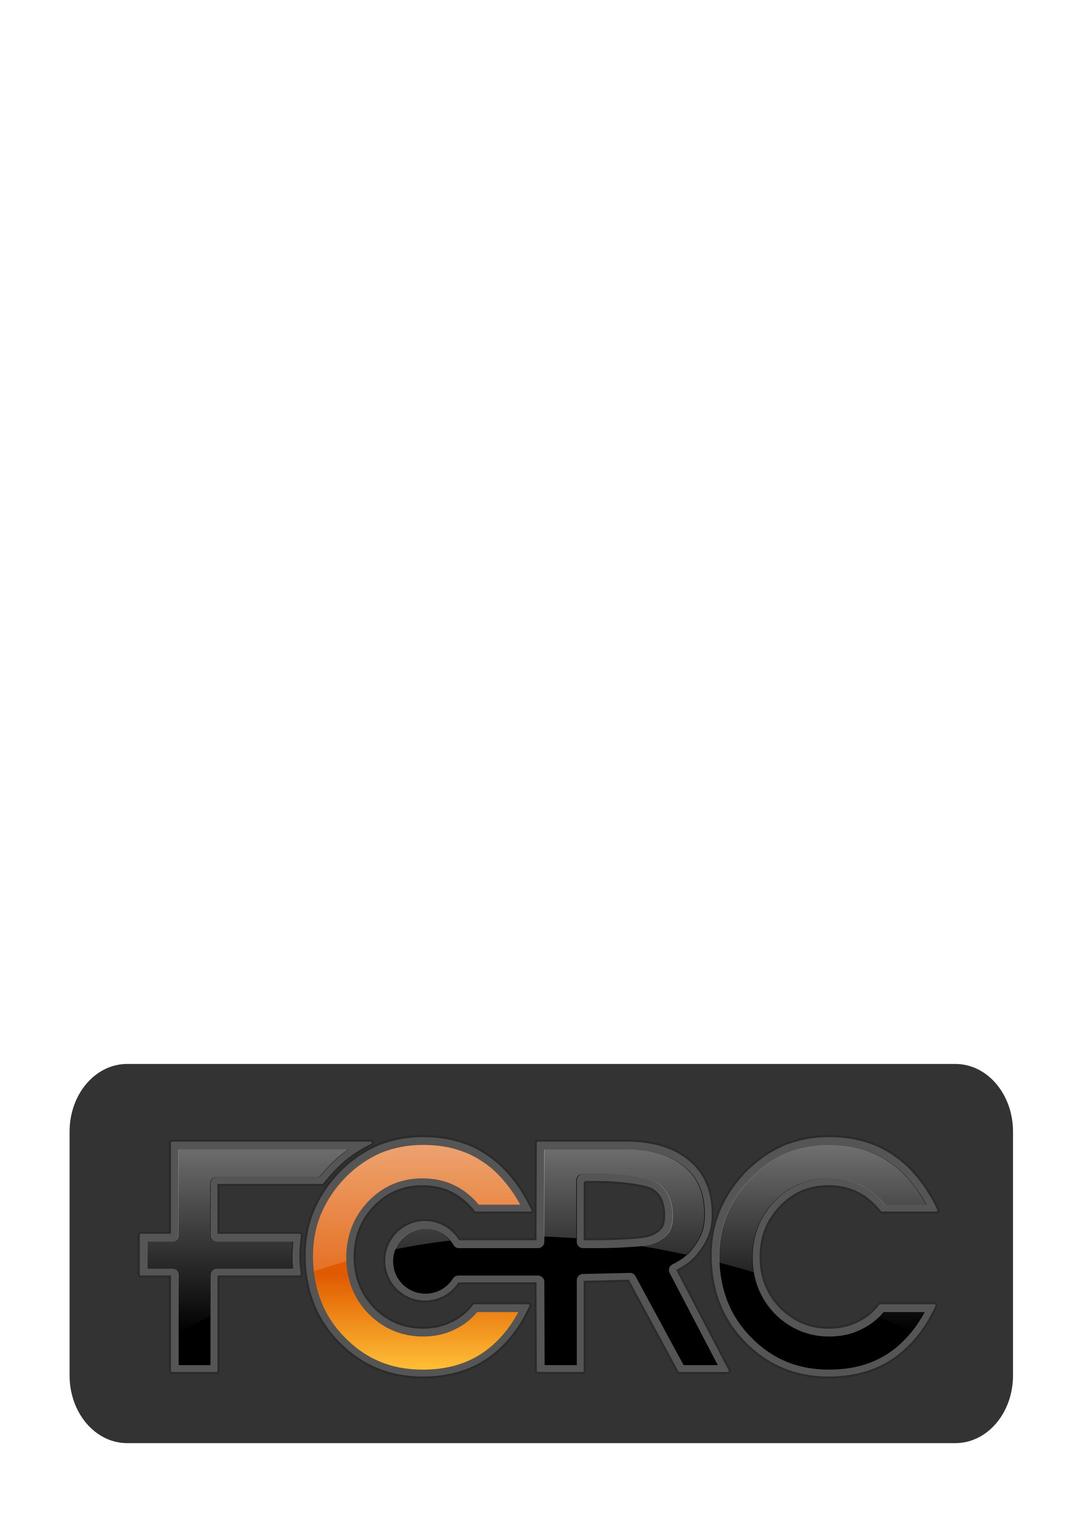 FCRC logo text 4 png transparent